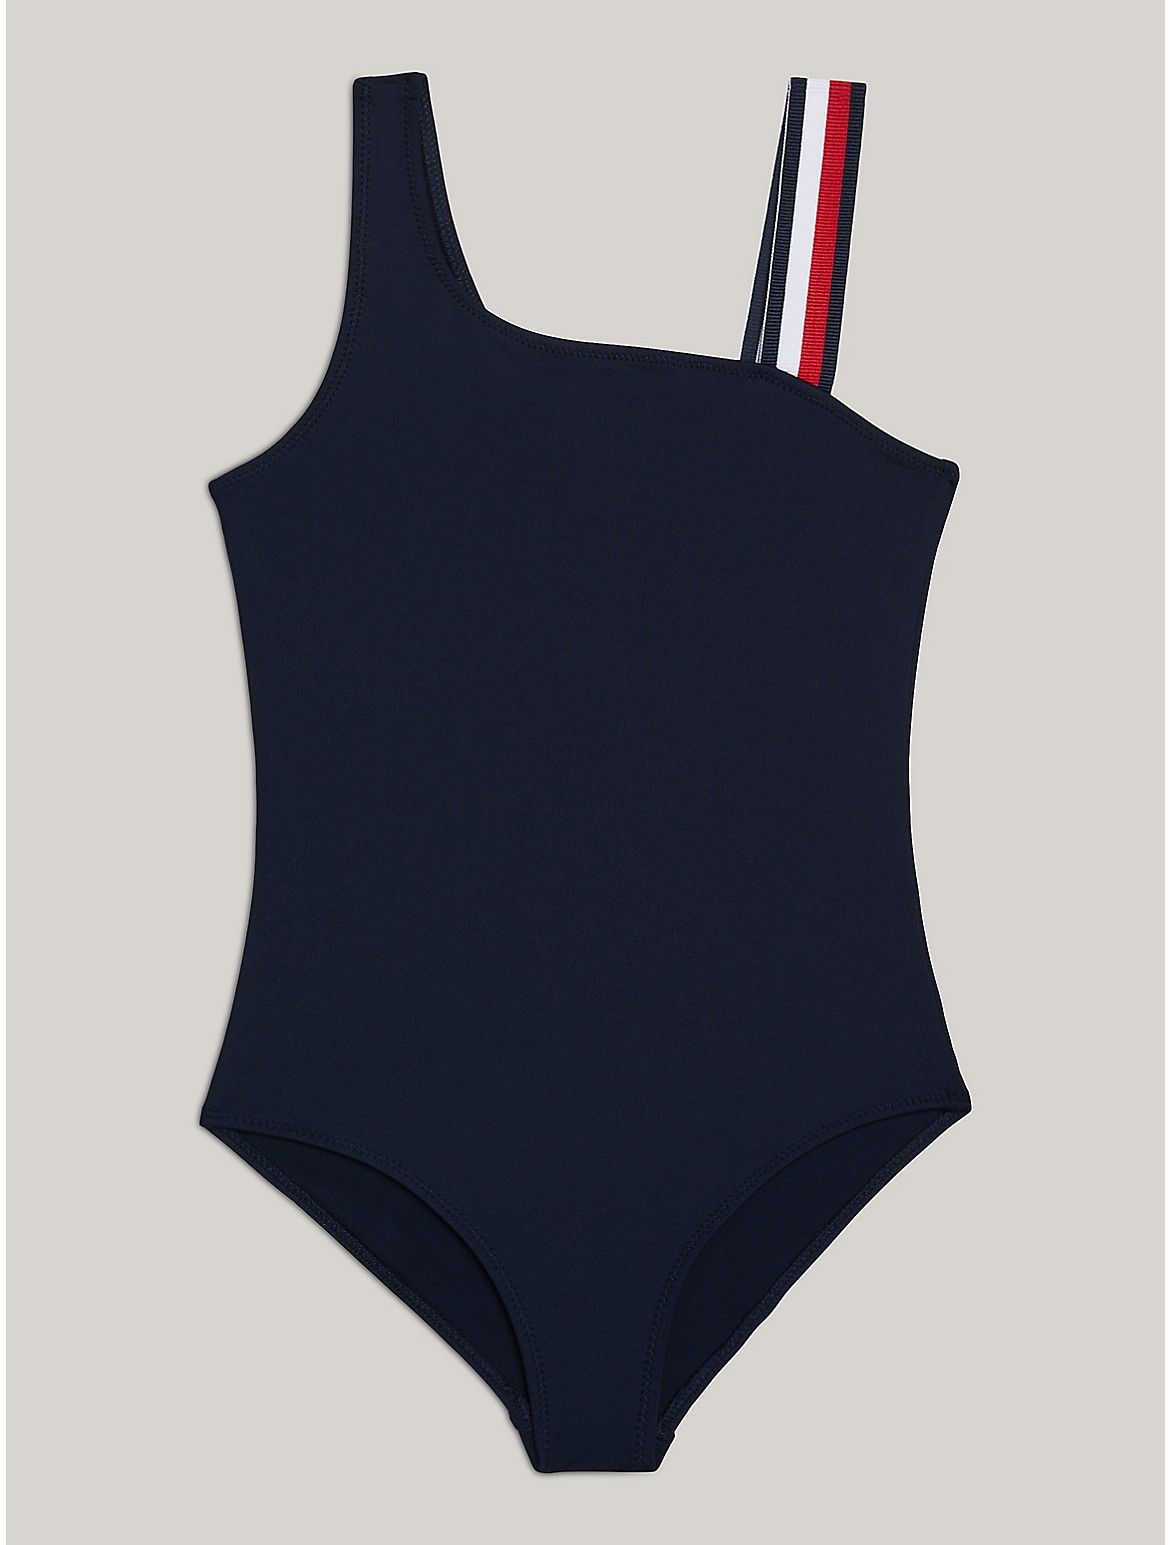 Tommy Hilfiger Girls' Kids' Stripe Strap One-Piece Swimsuit